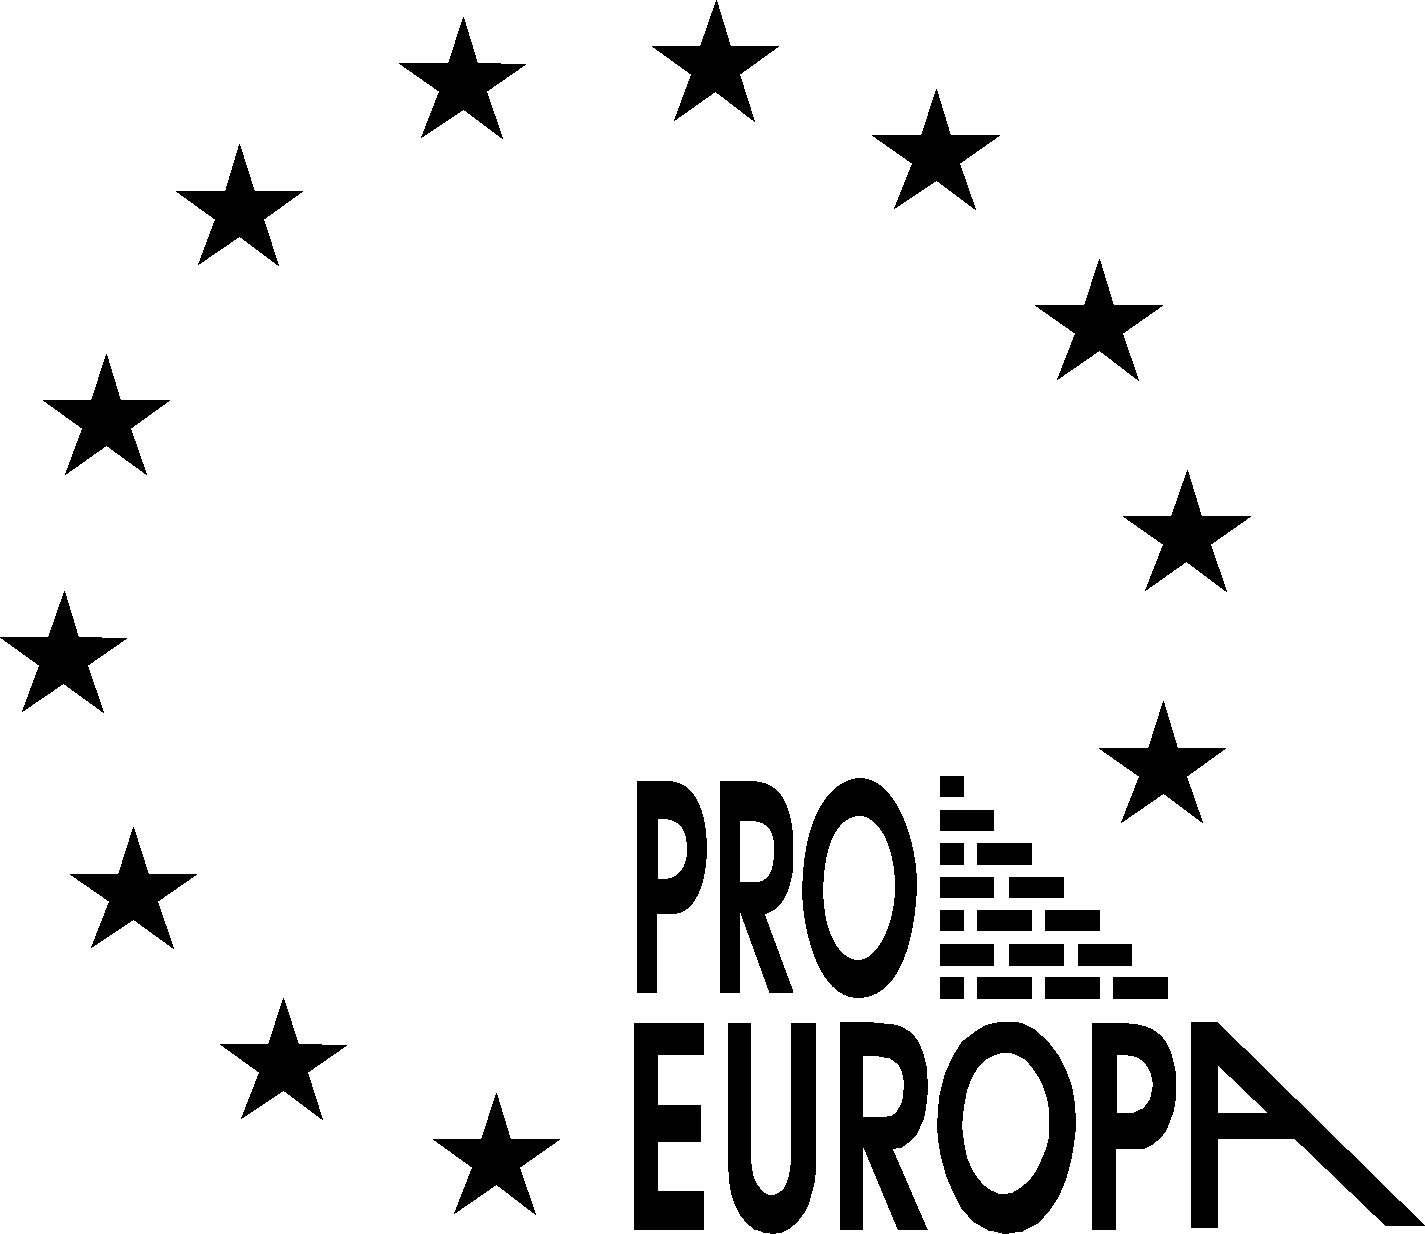 Liga pro Europa Tg.Mures logo